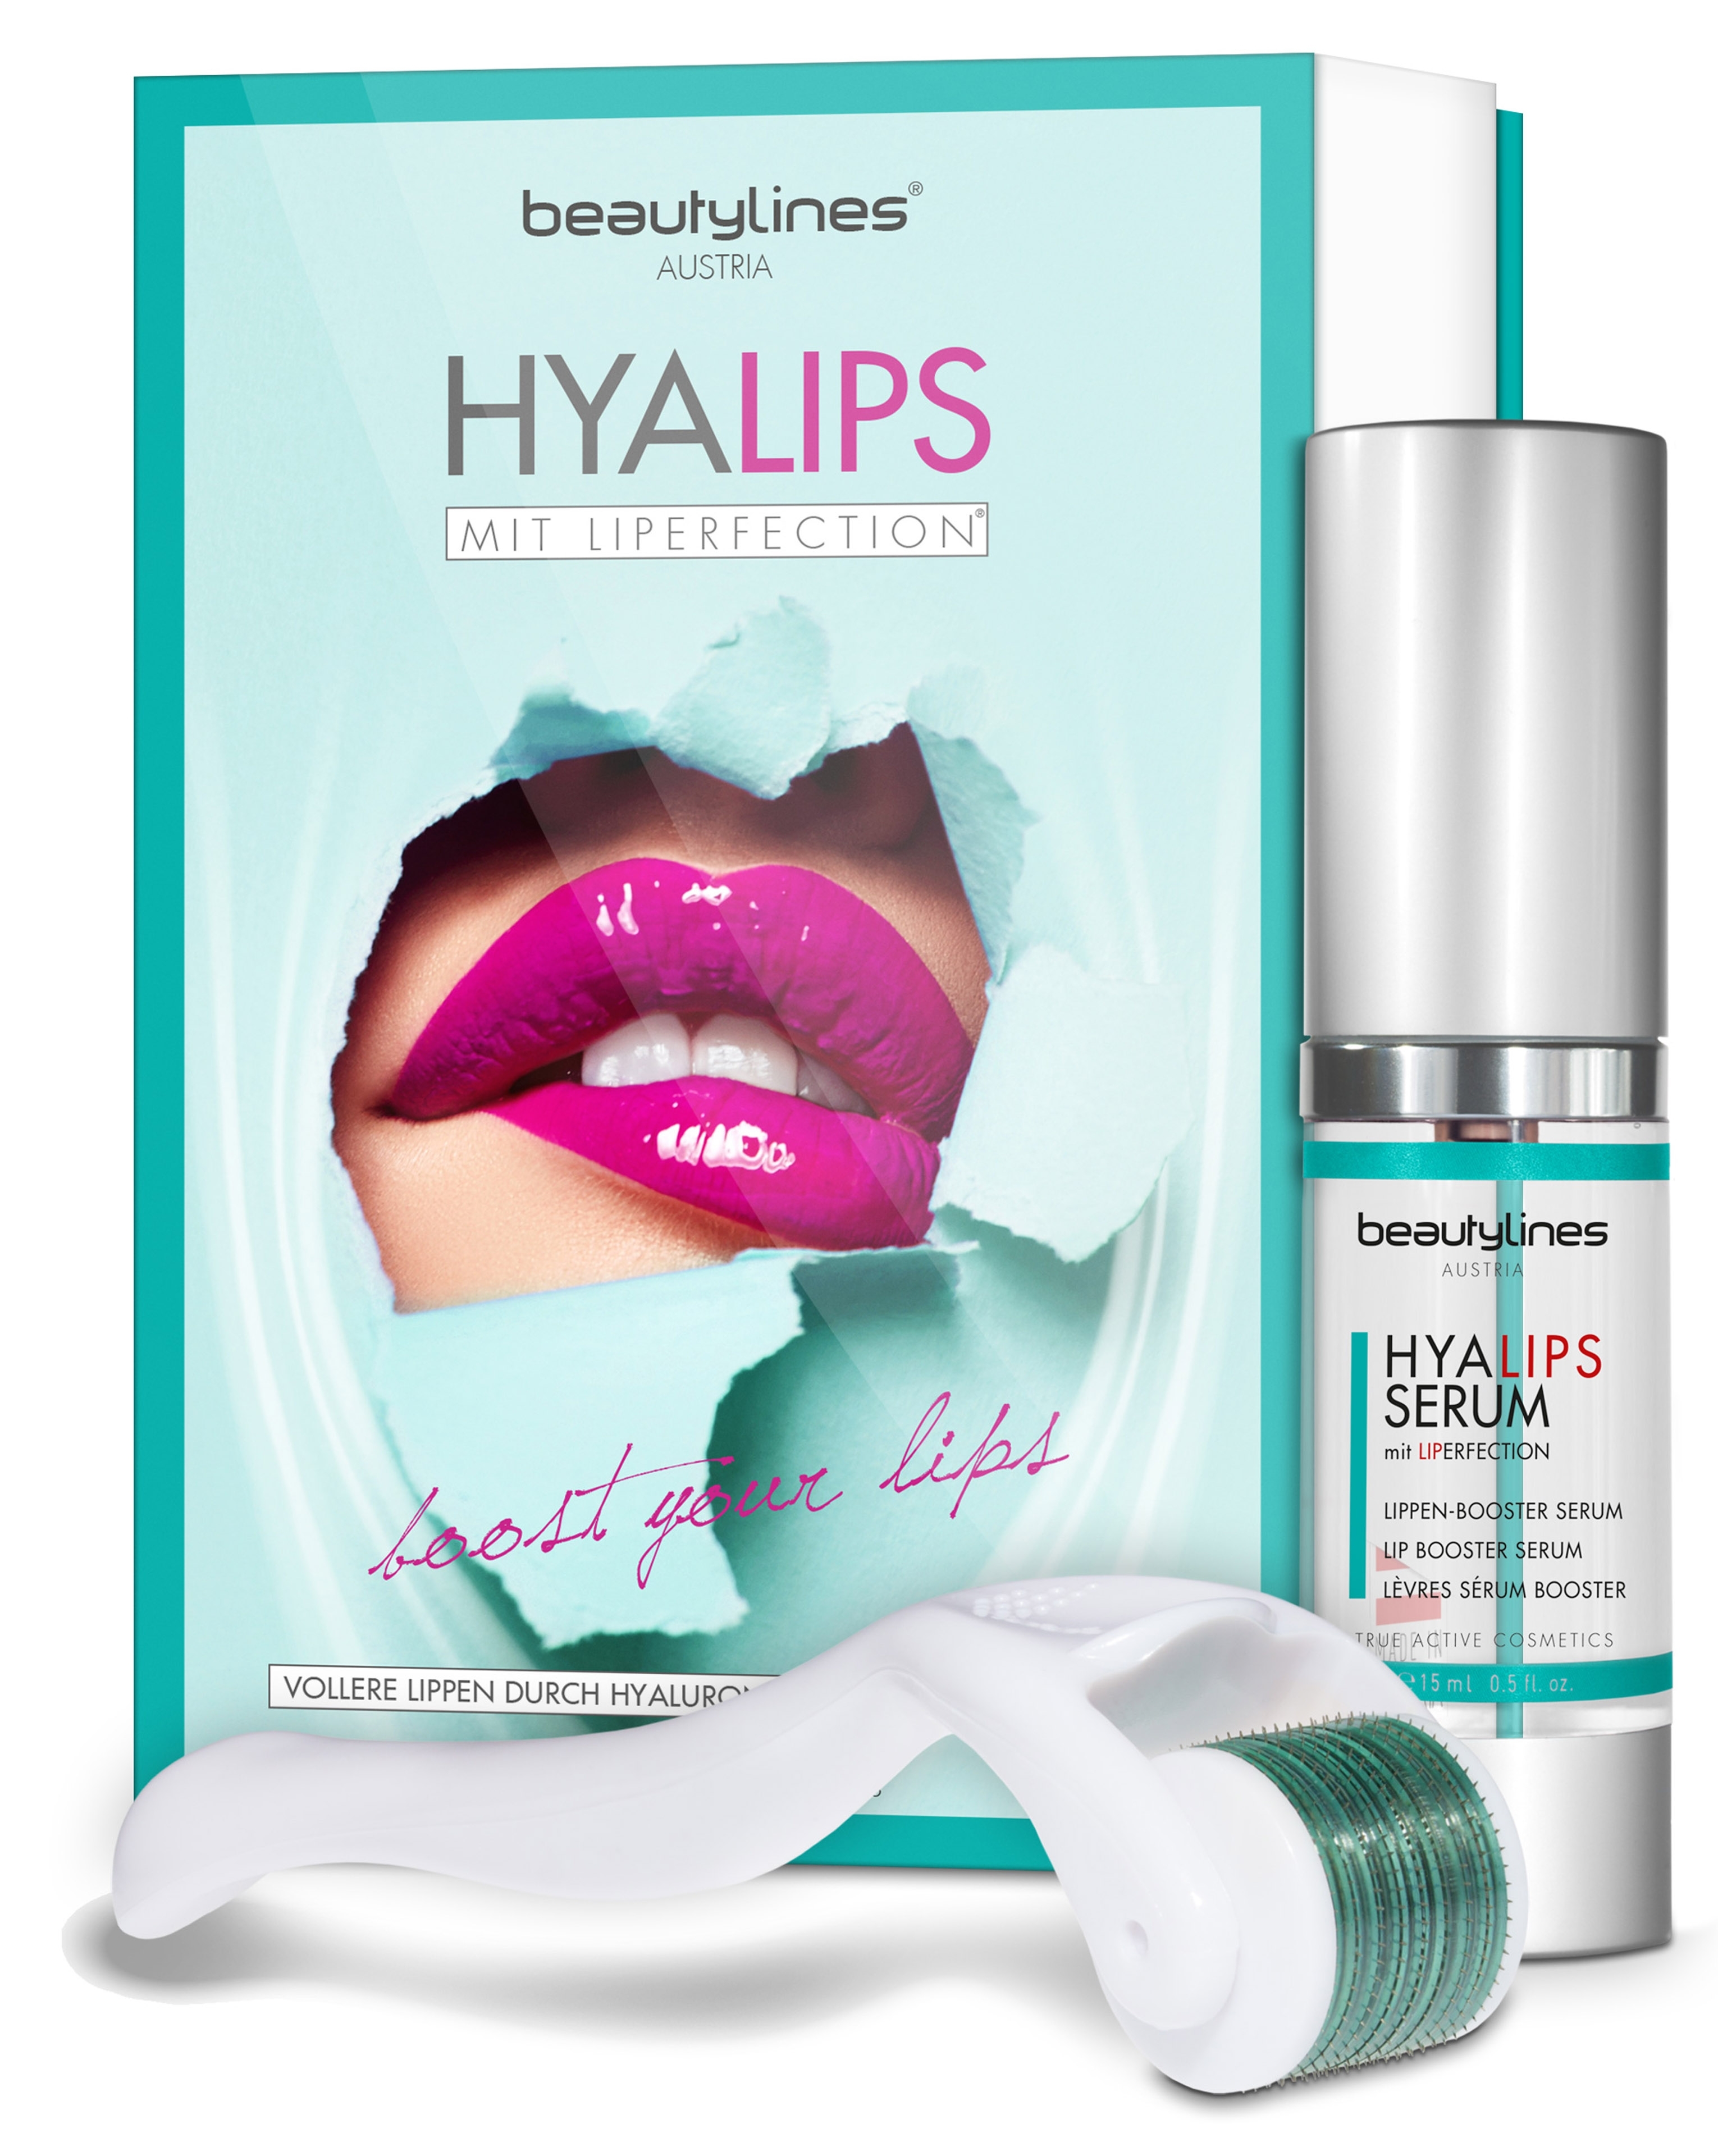 Beautylines Hyalips mit Liperfection